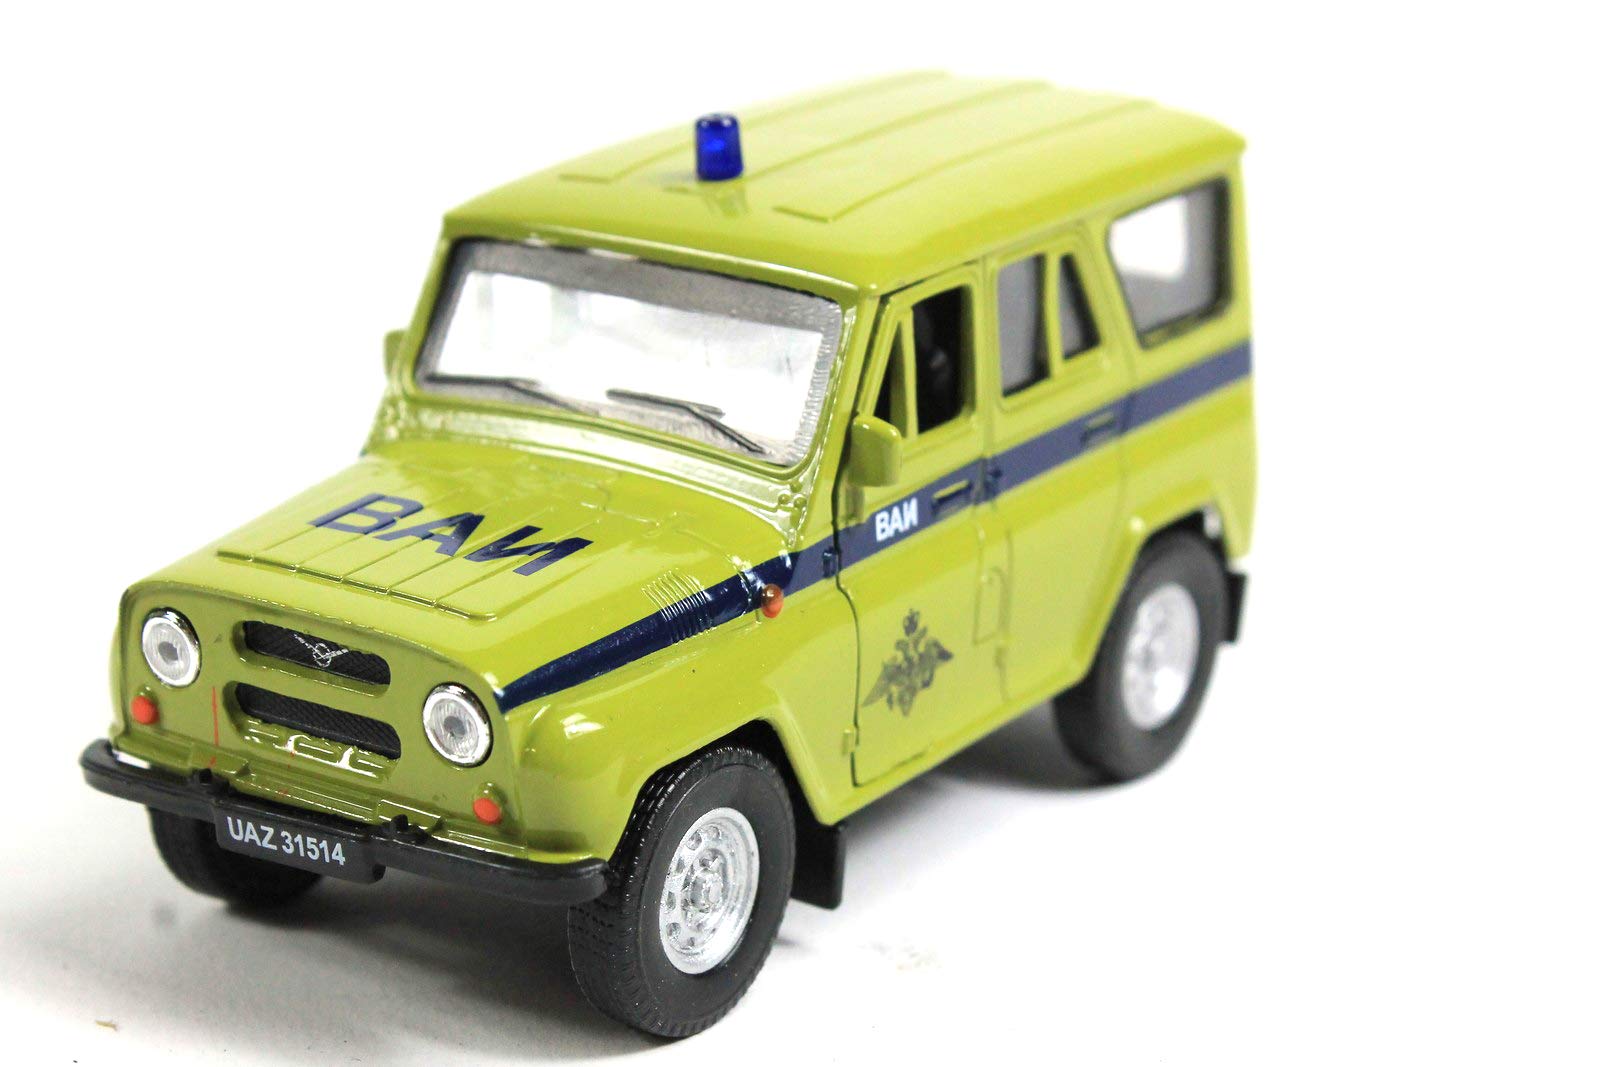 UAZ Modellauto - 31514 Militärpolizei von Autotime